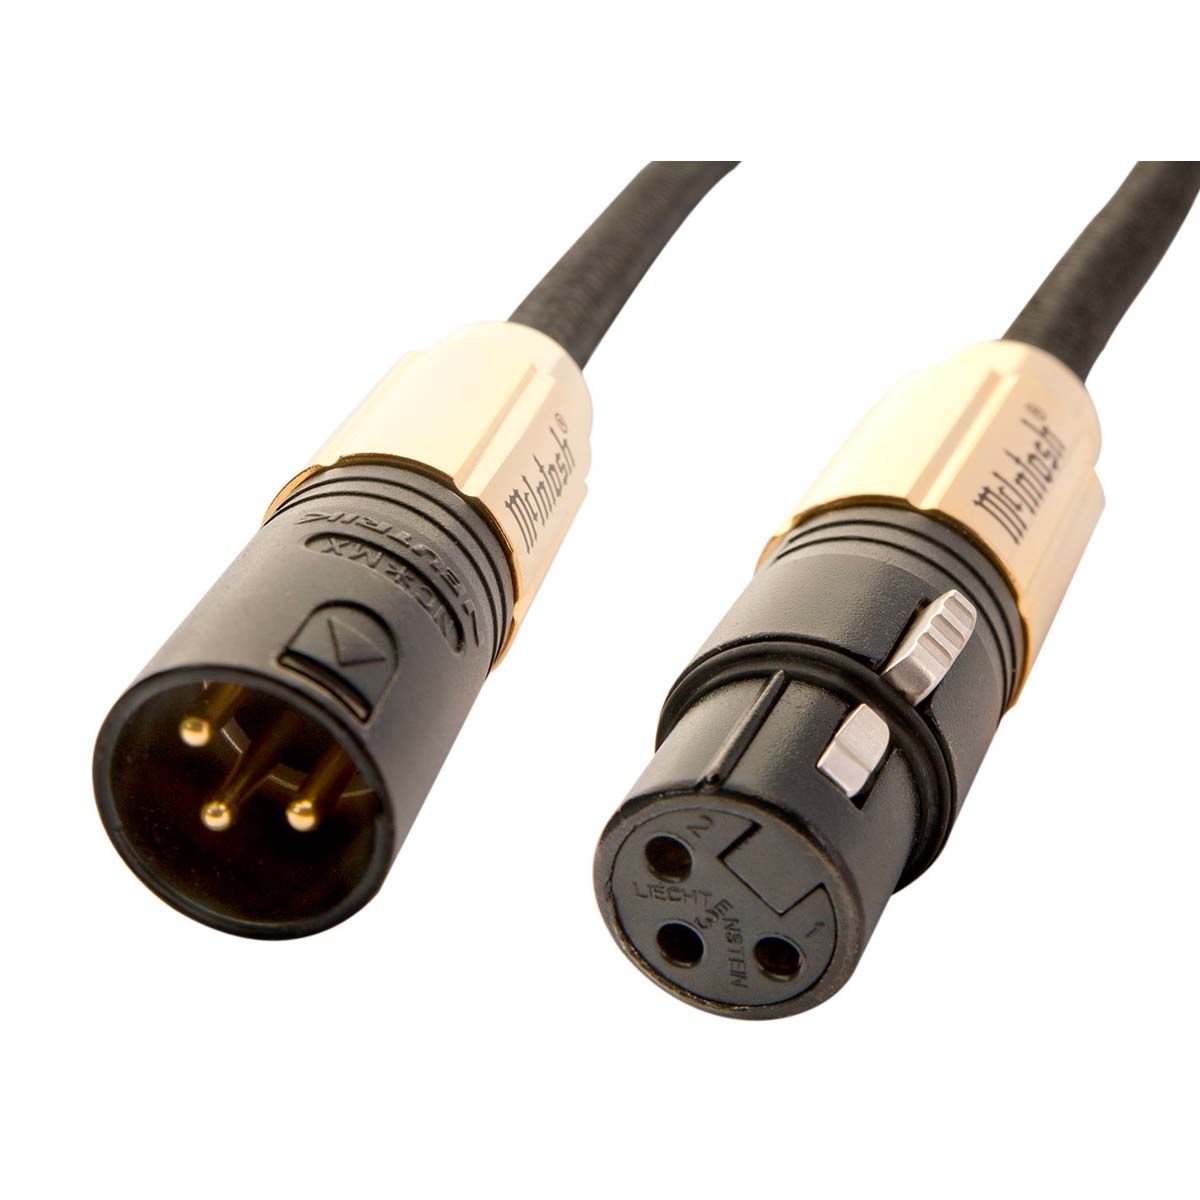 McIntosh Balanced Audio Cables - close-up of connectors